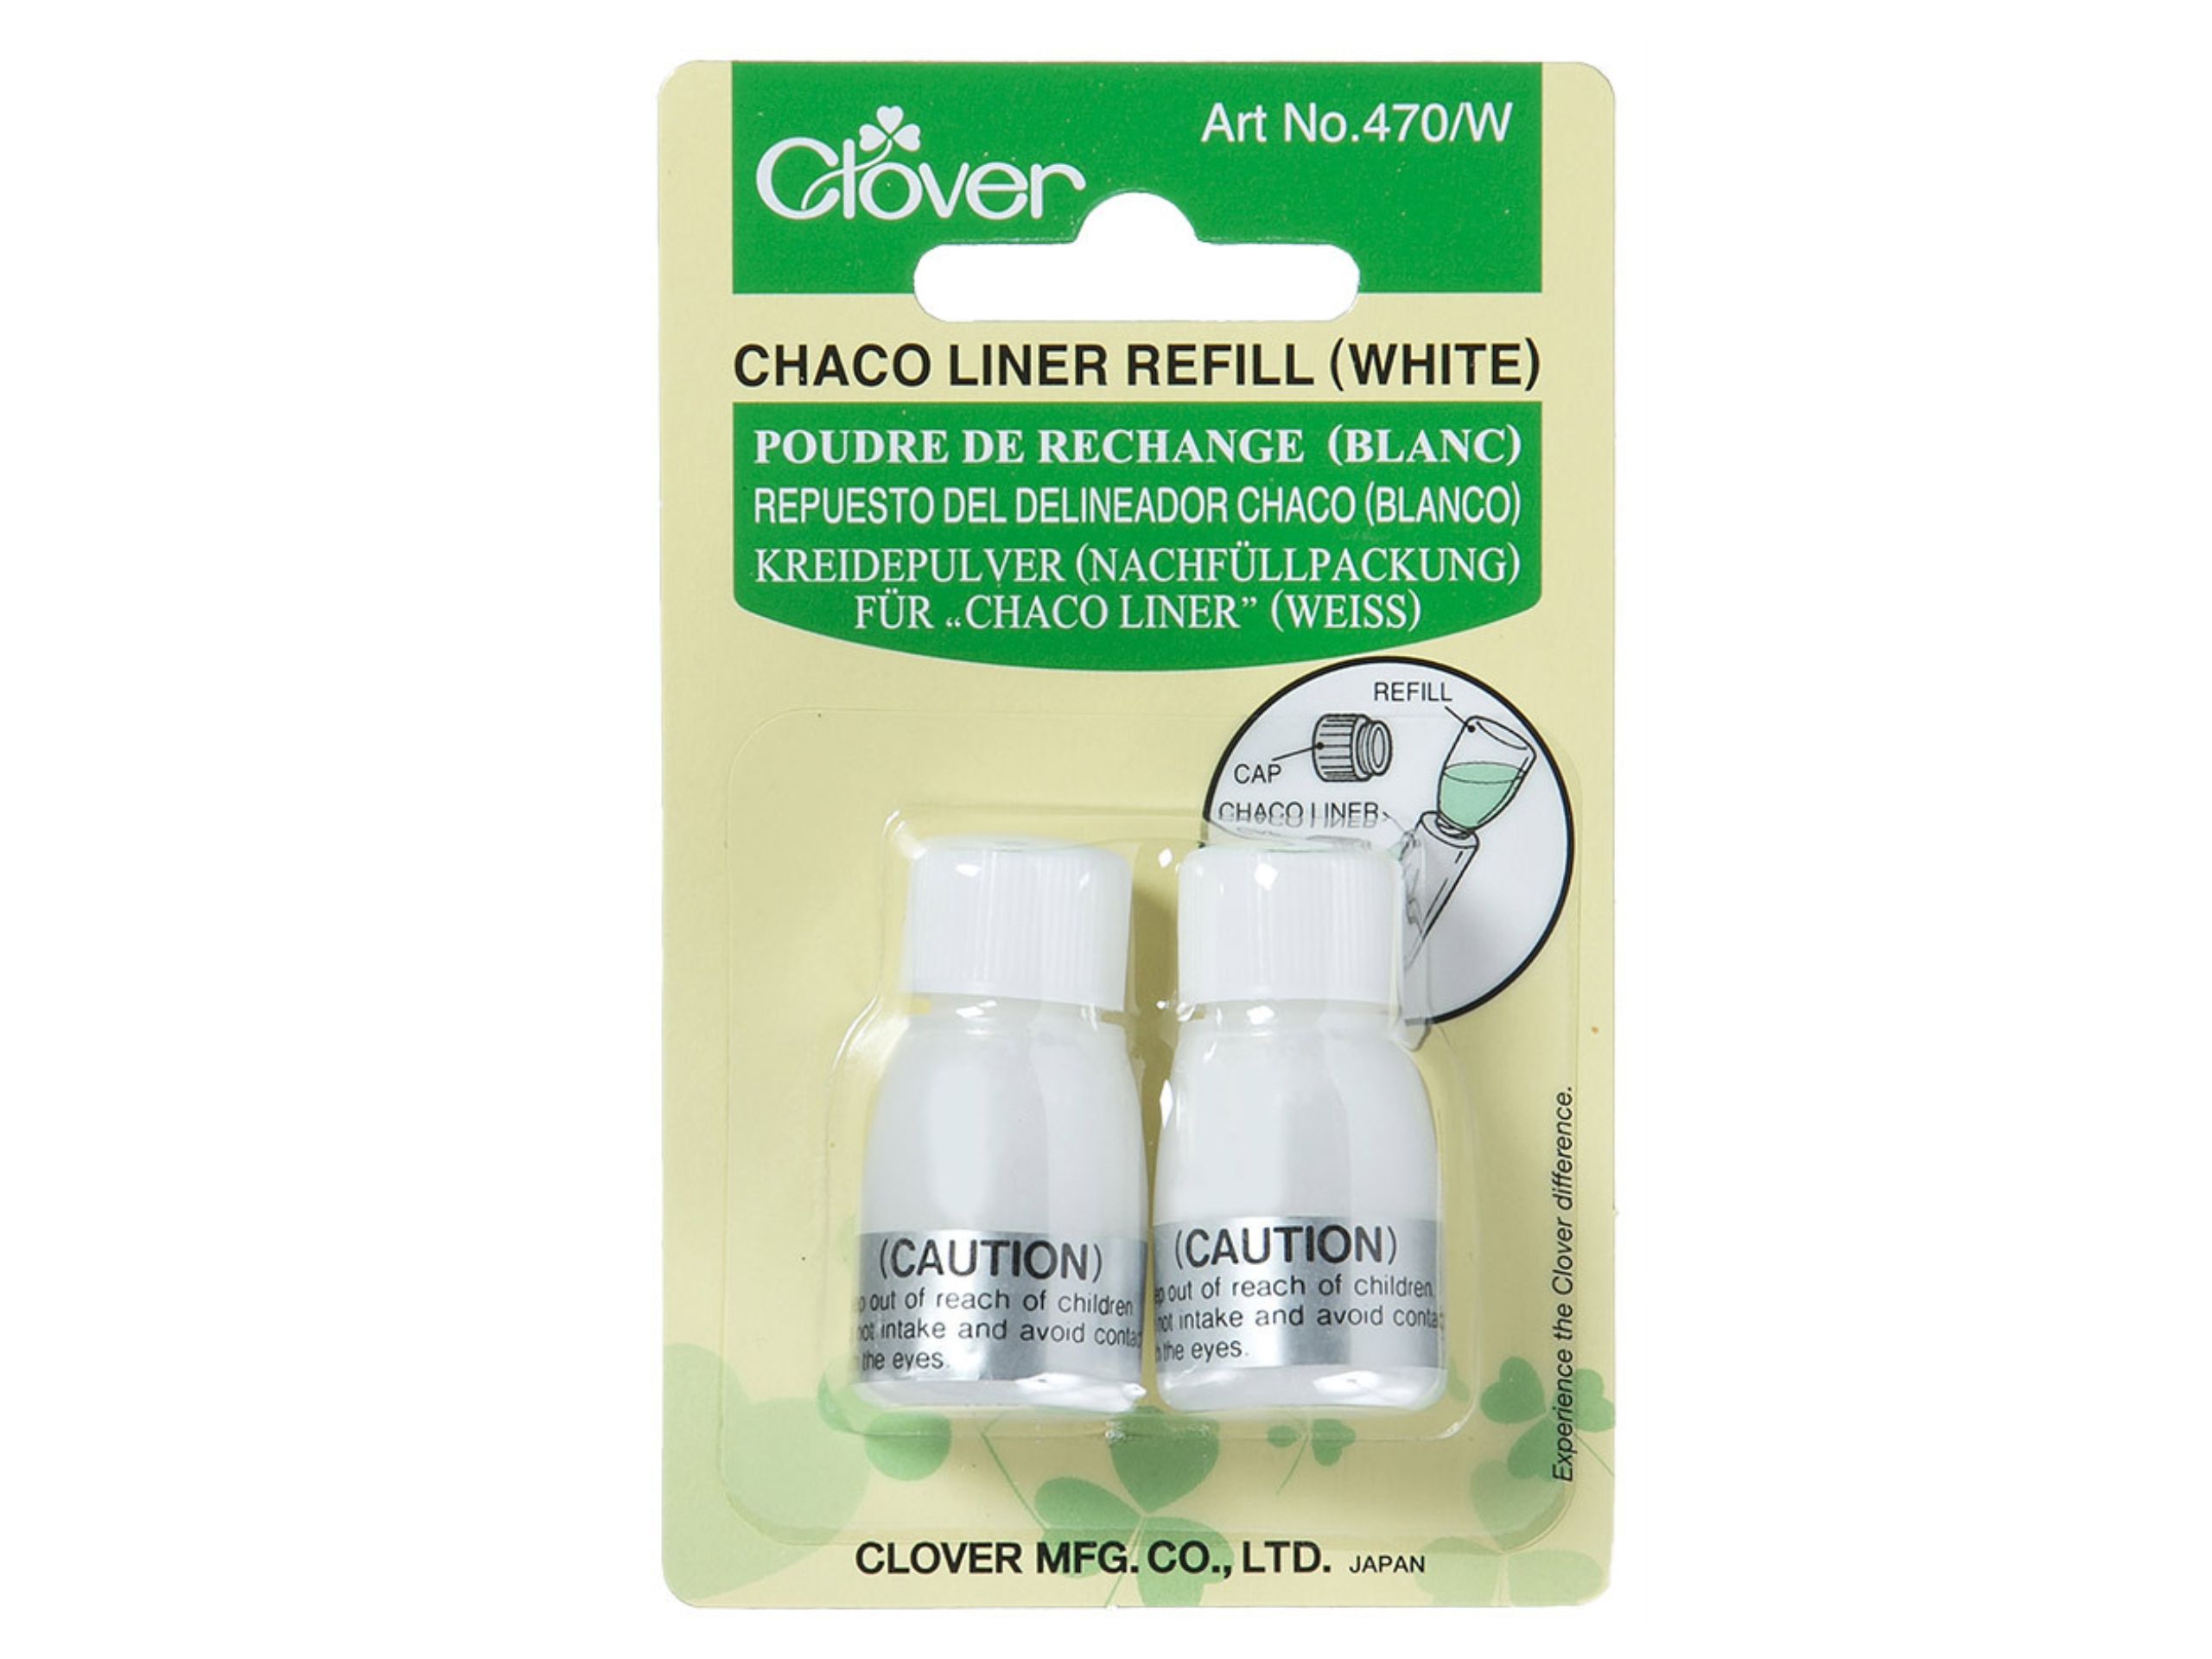 Chaco Liner Refill Kreidepulver Weiß Clover